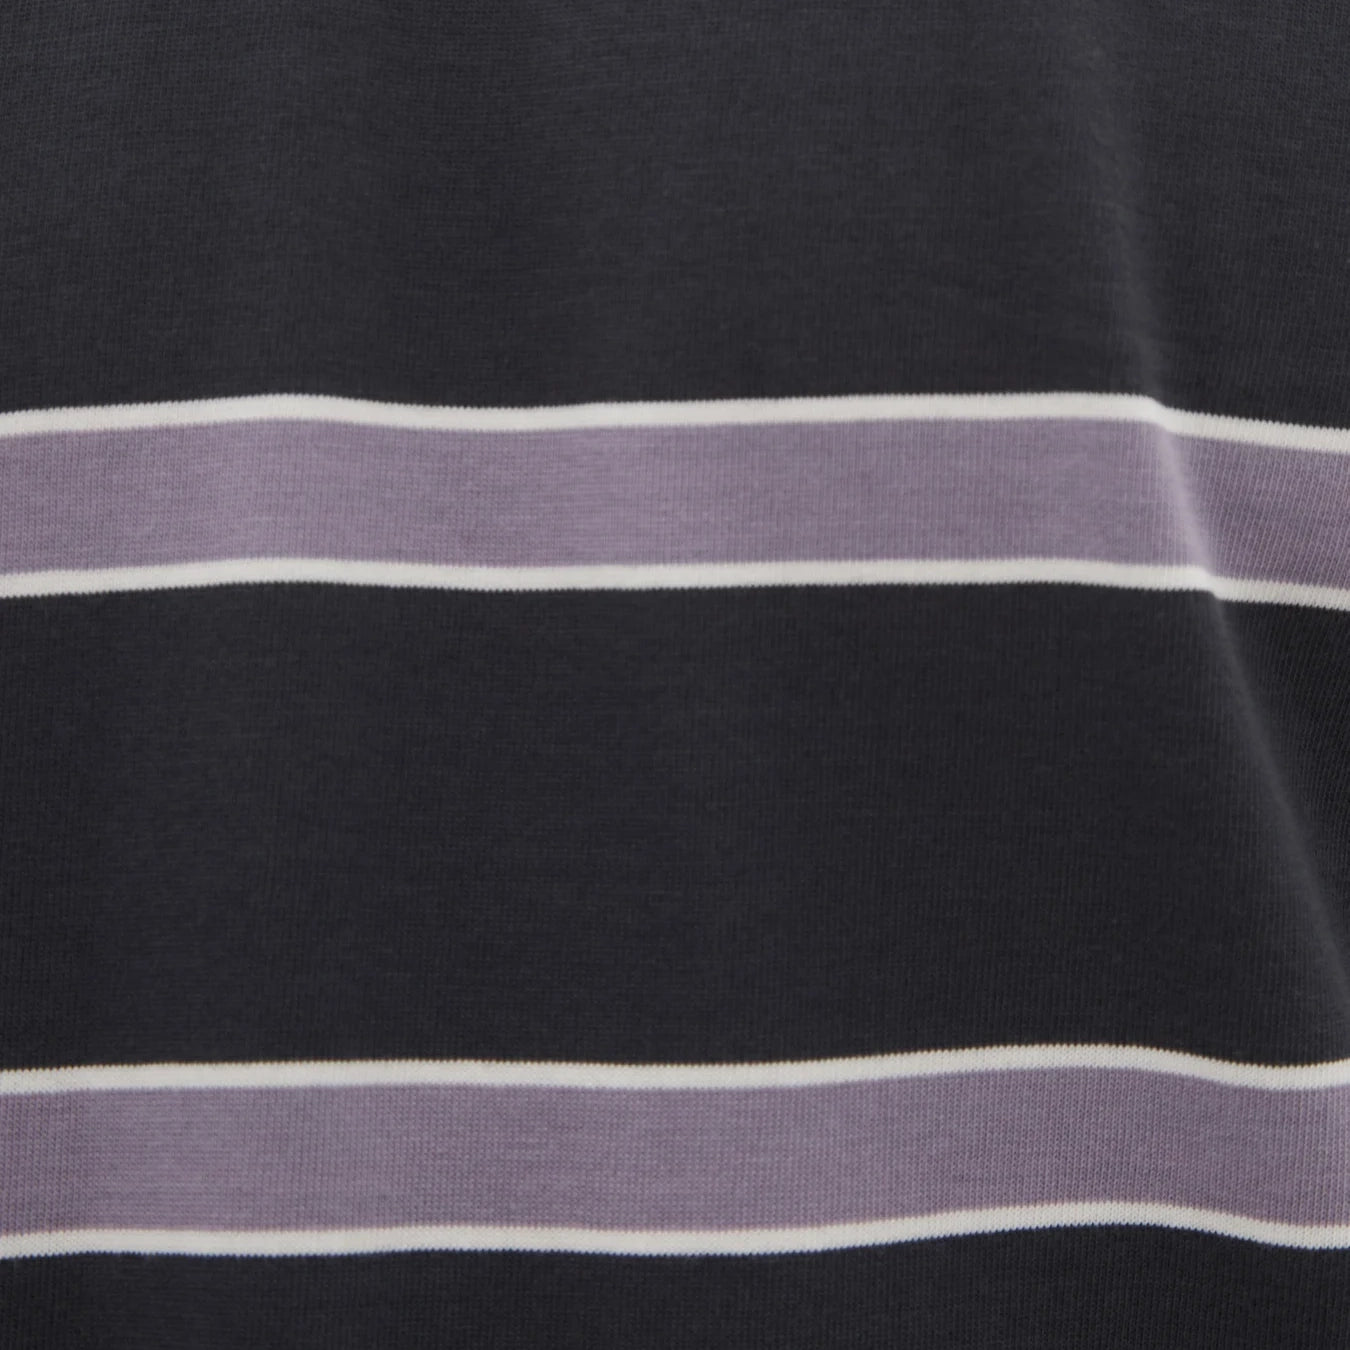 Johannes Multicolour Stripe T-Shirt - Battleship Grey